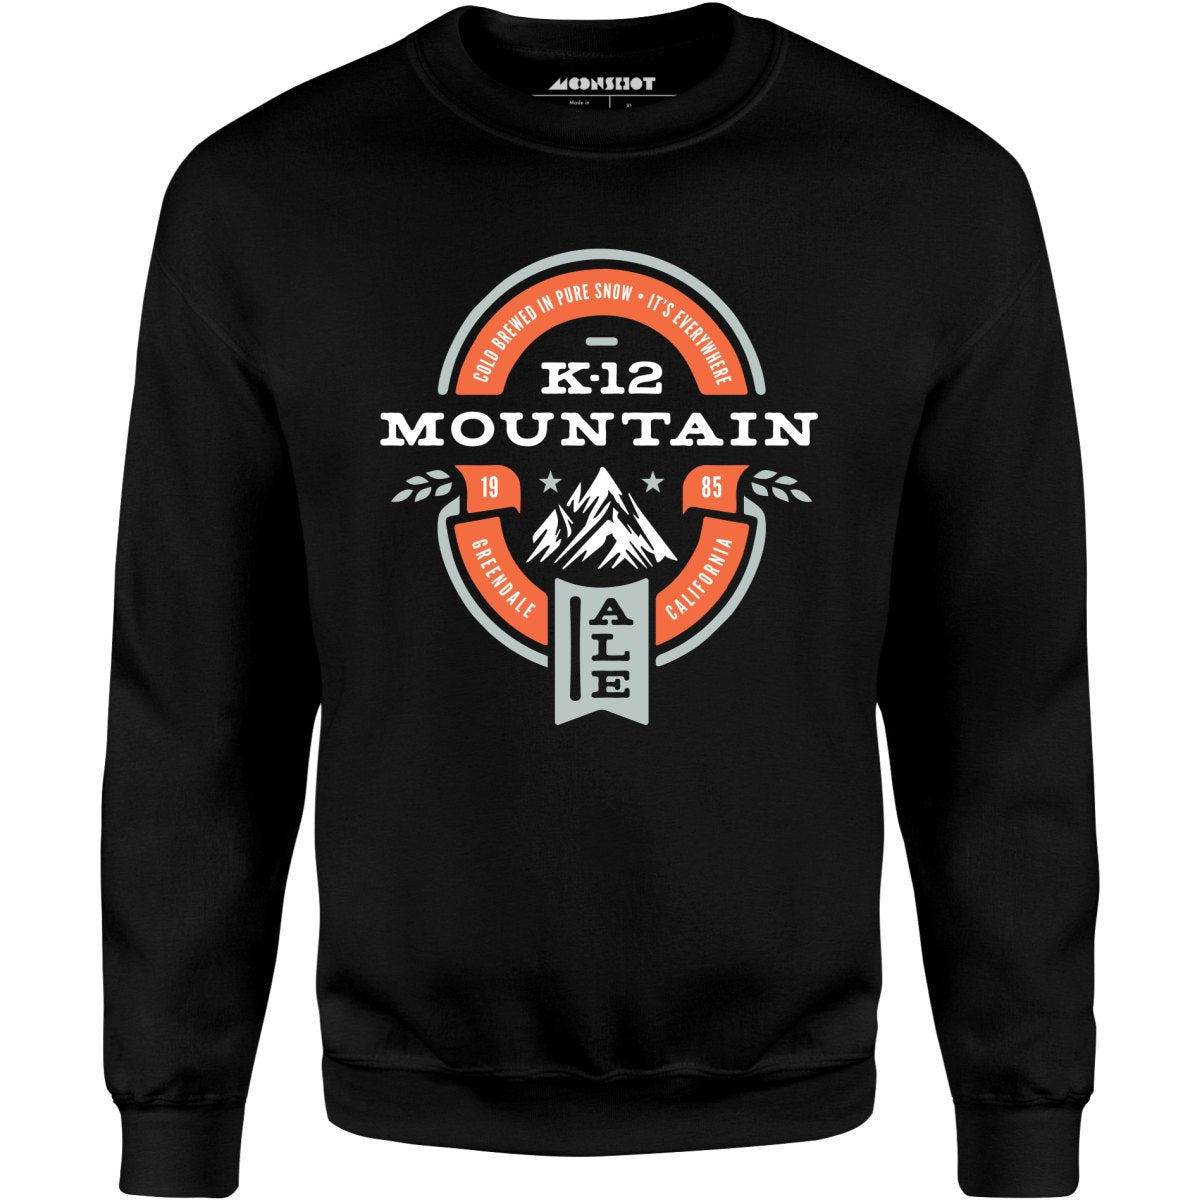 K-12 Mountain Ale - Unisex Sweatshirt